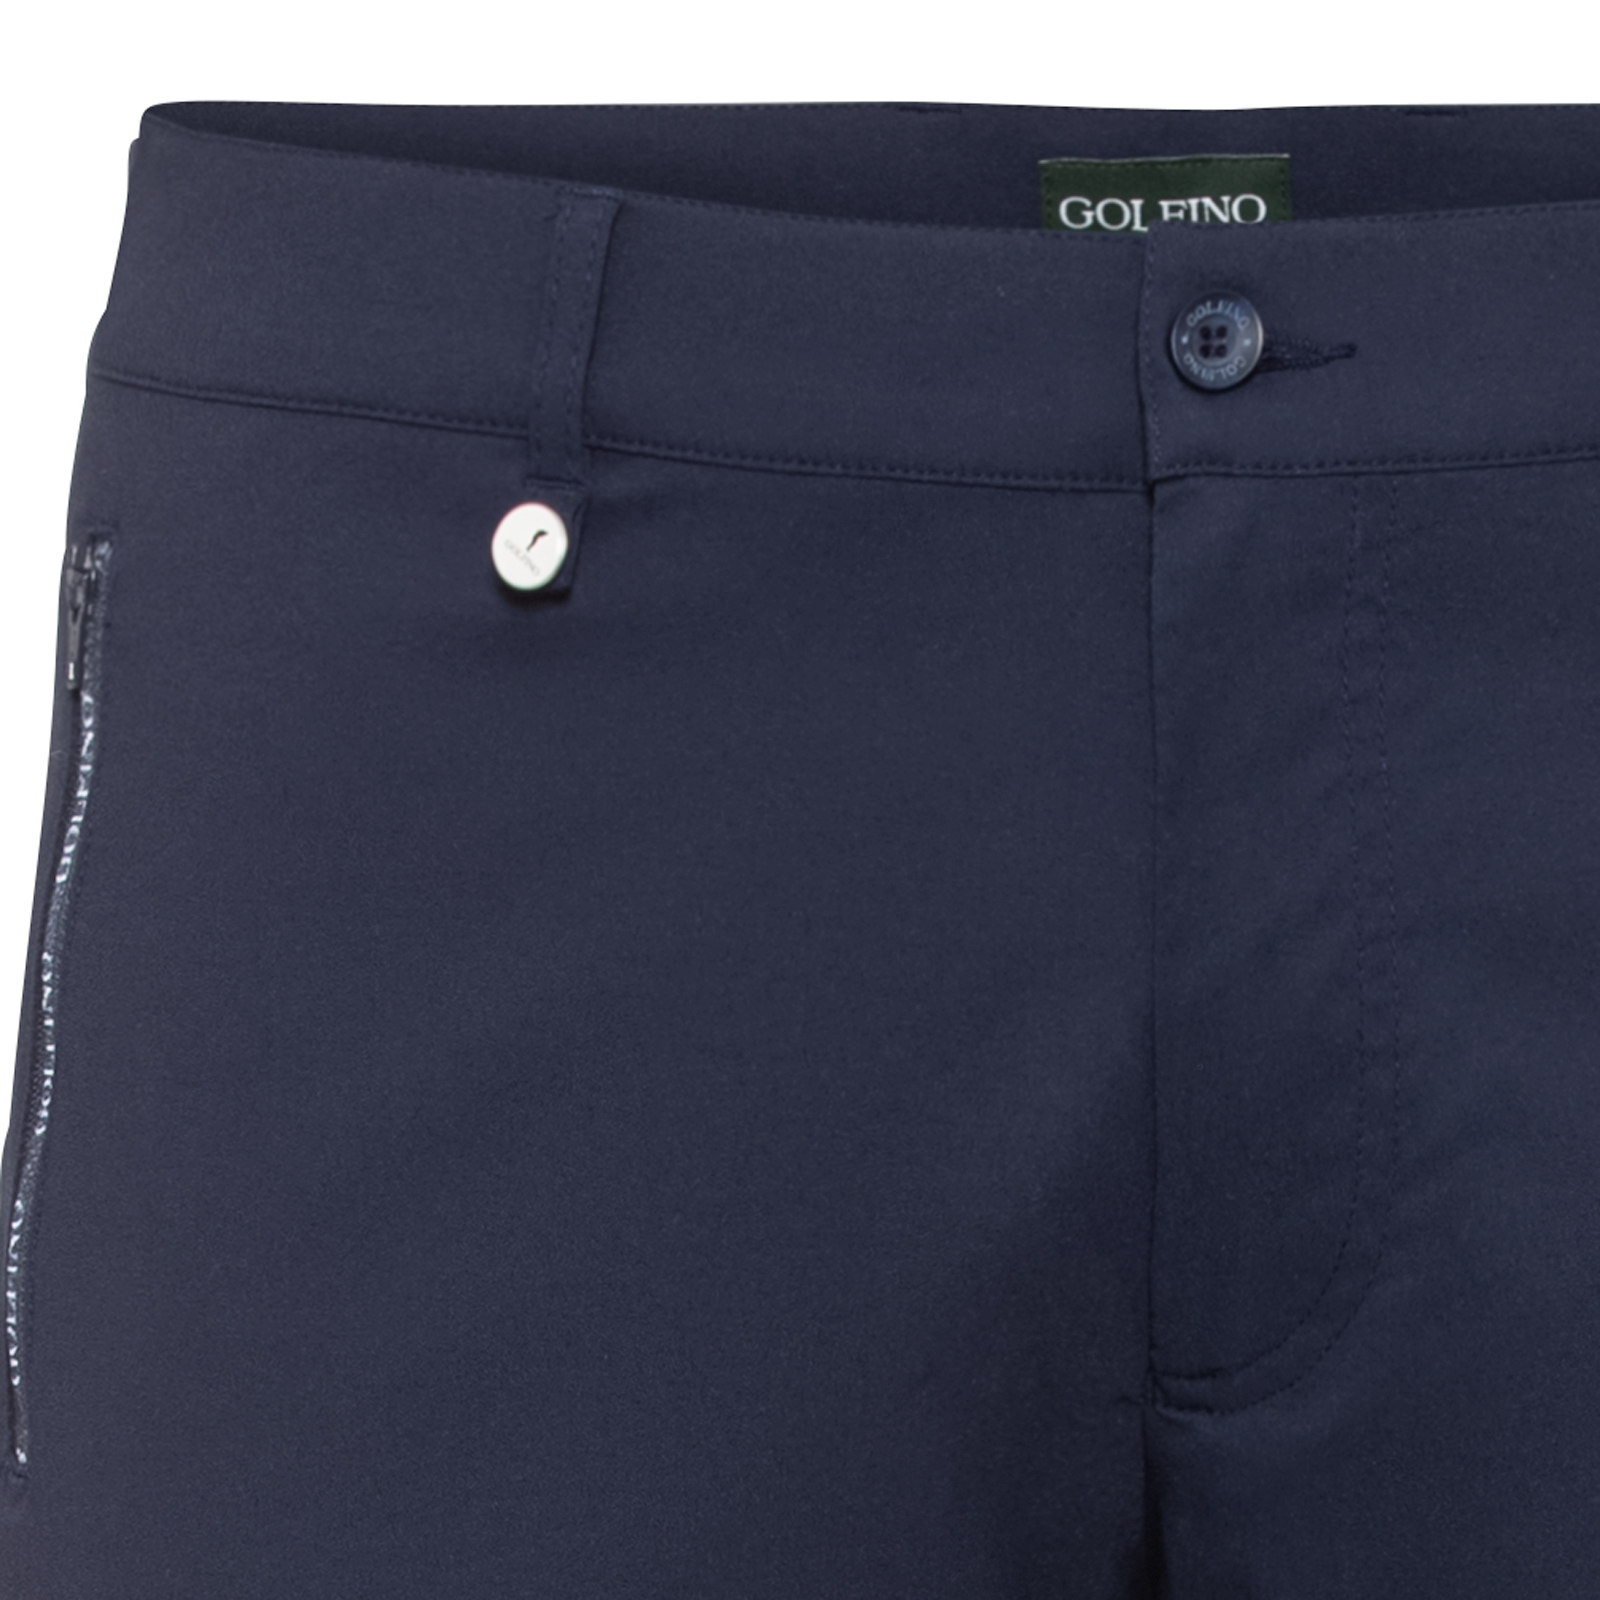 Men's slim fit stretch golf trousers